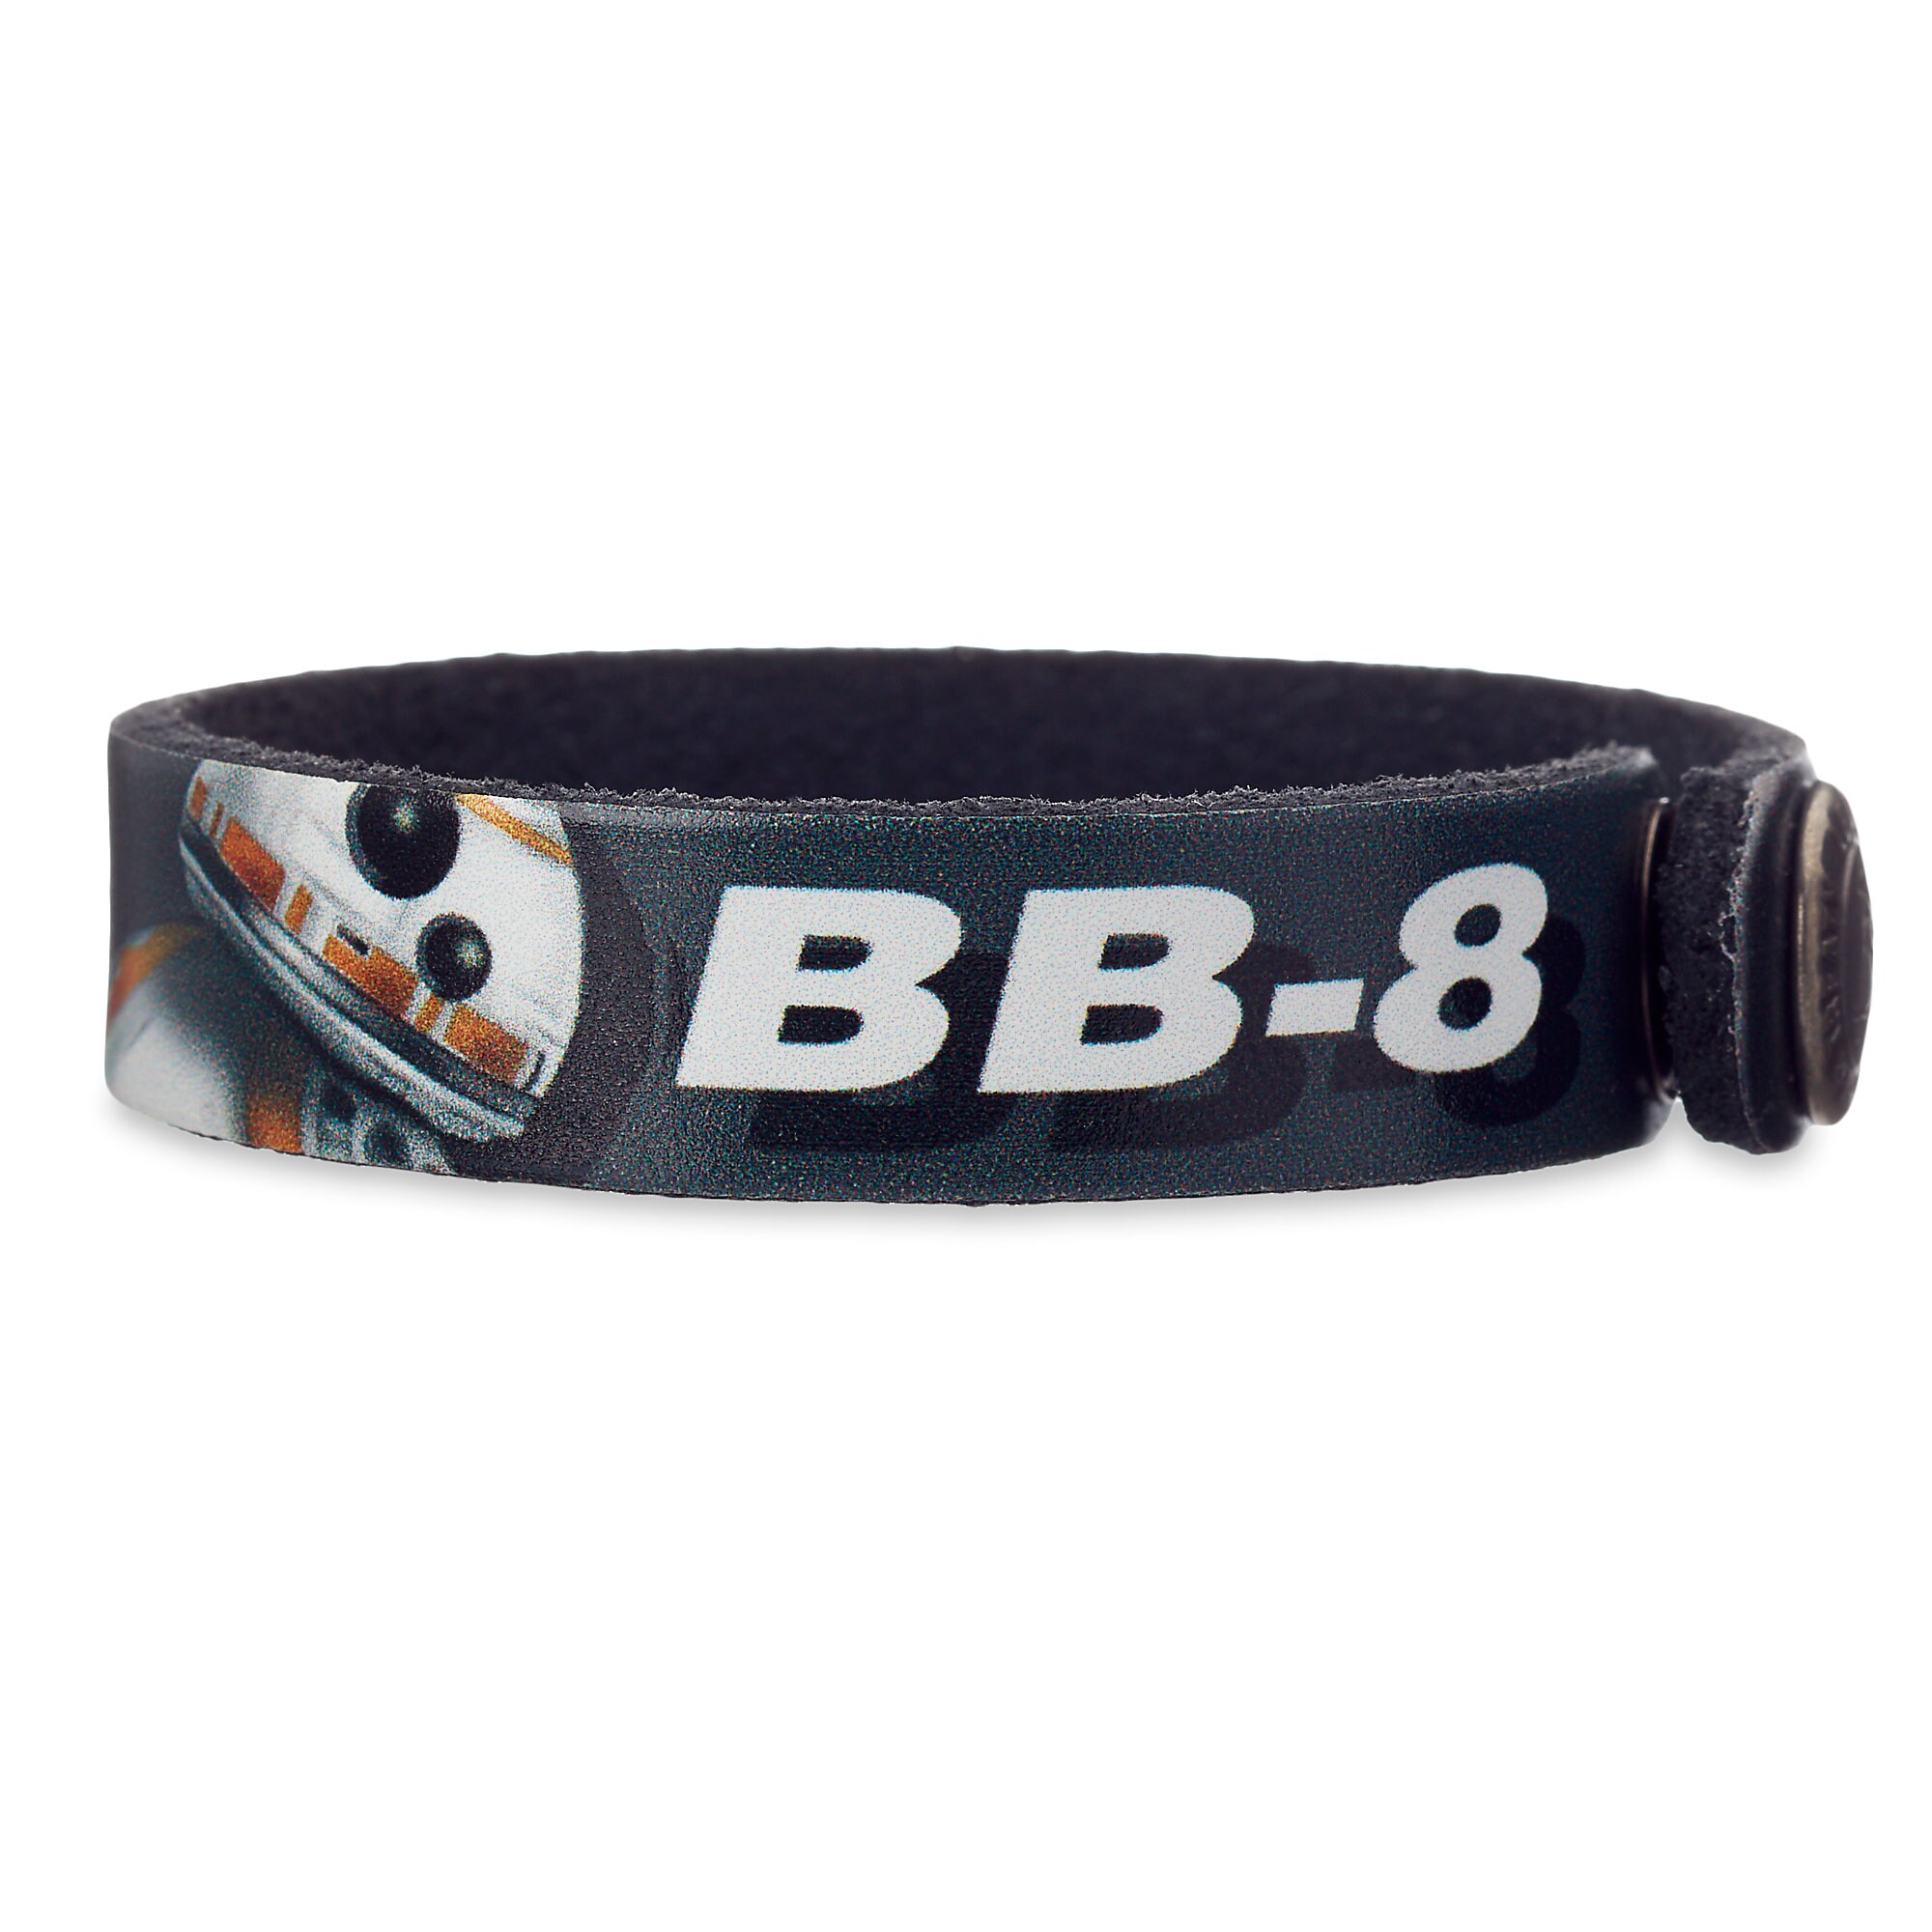 BB-8 Leather Bracelet - Star Wars - Personalizable